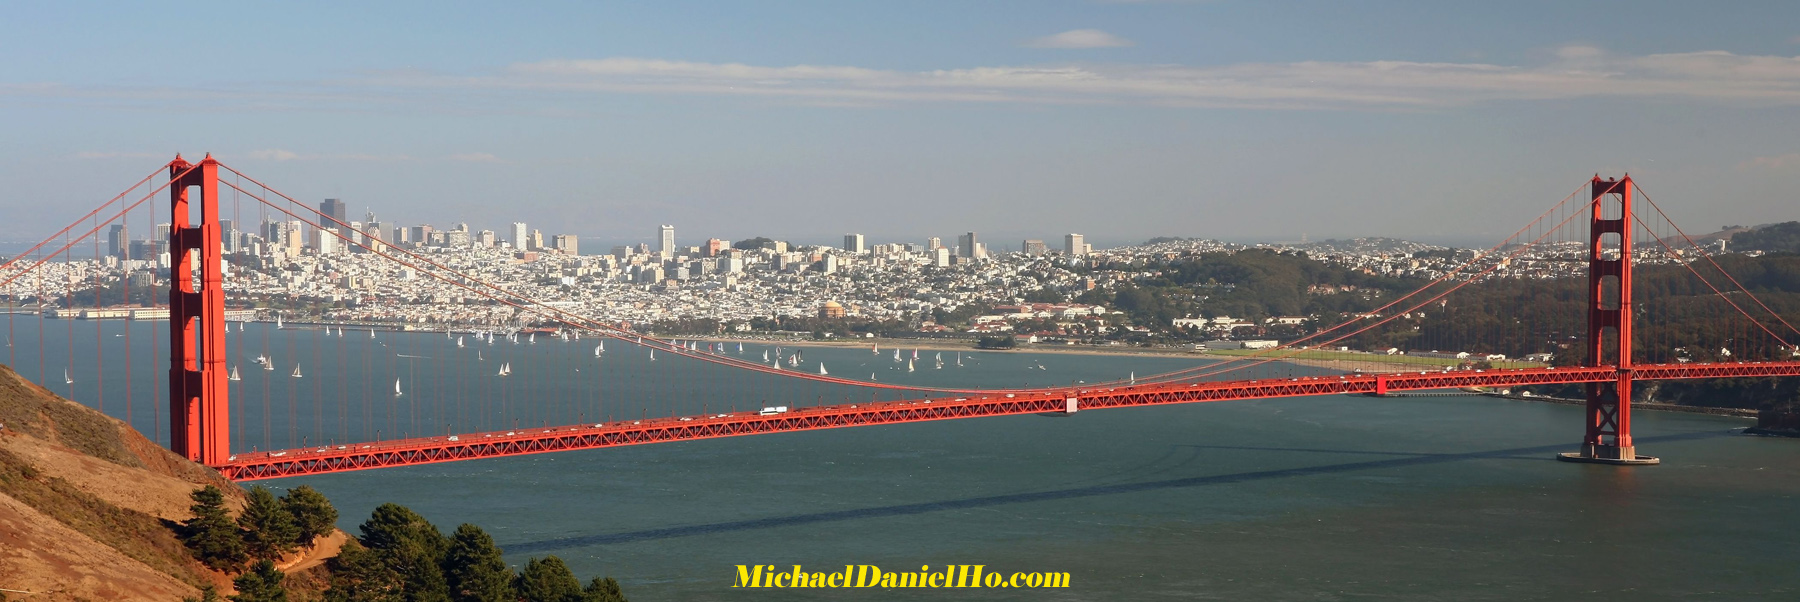 photo of the Golden Gate bridge